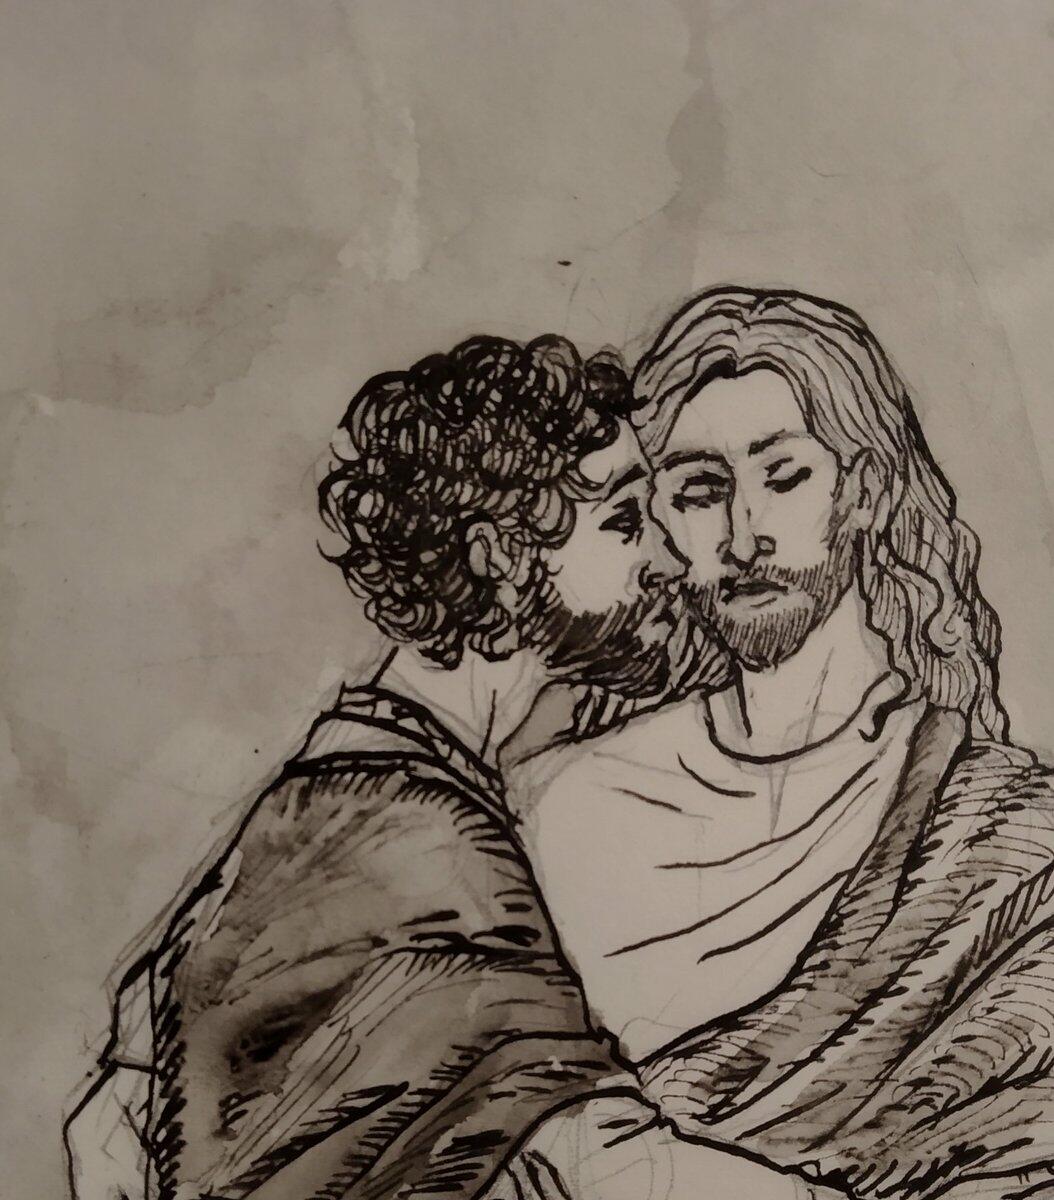 Jesus and judas animated short online